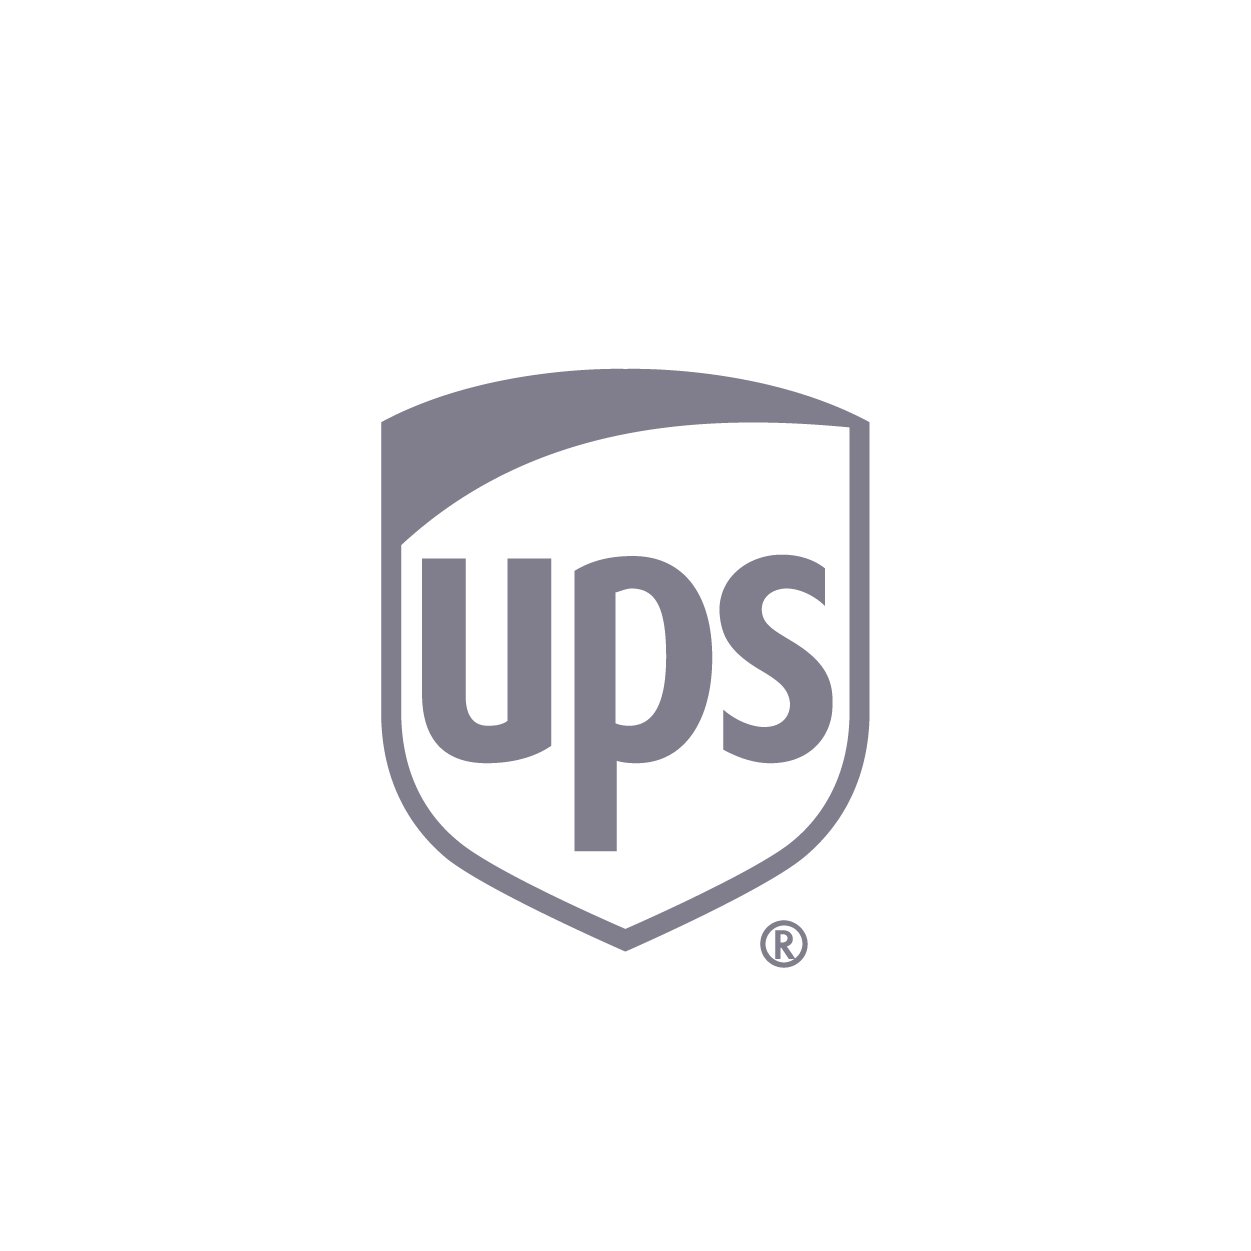 cindy solomon customer loyalty client UPS